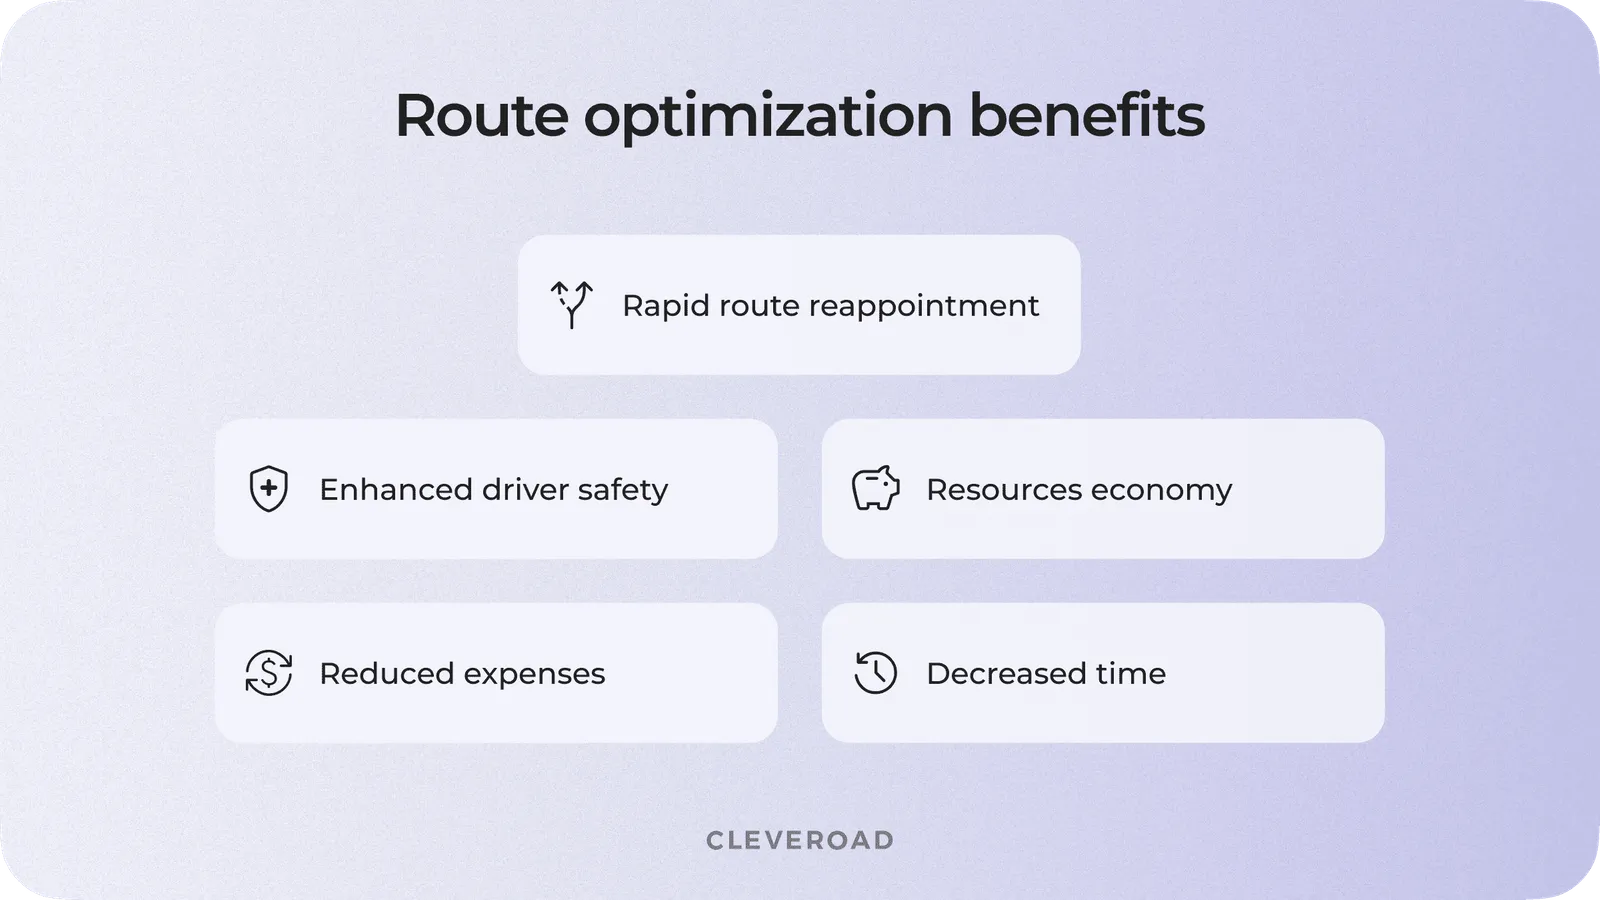 Route optimization benefits